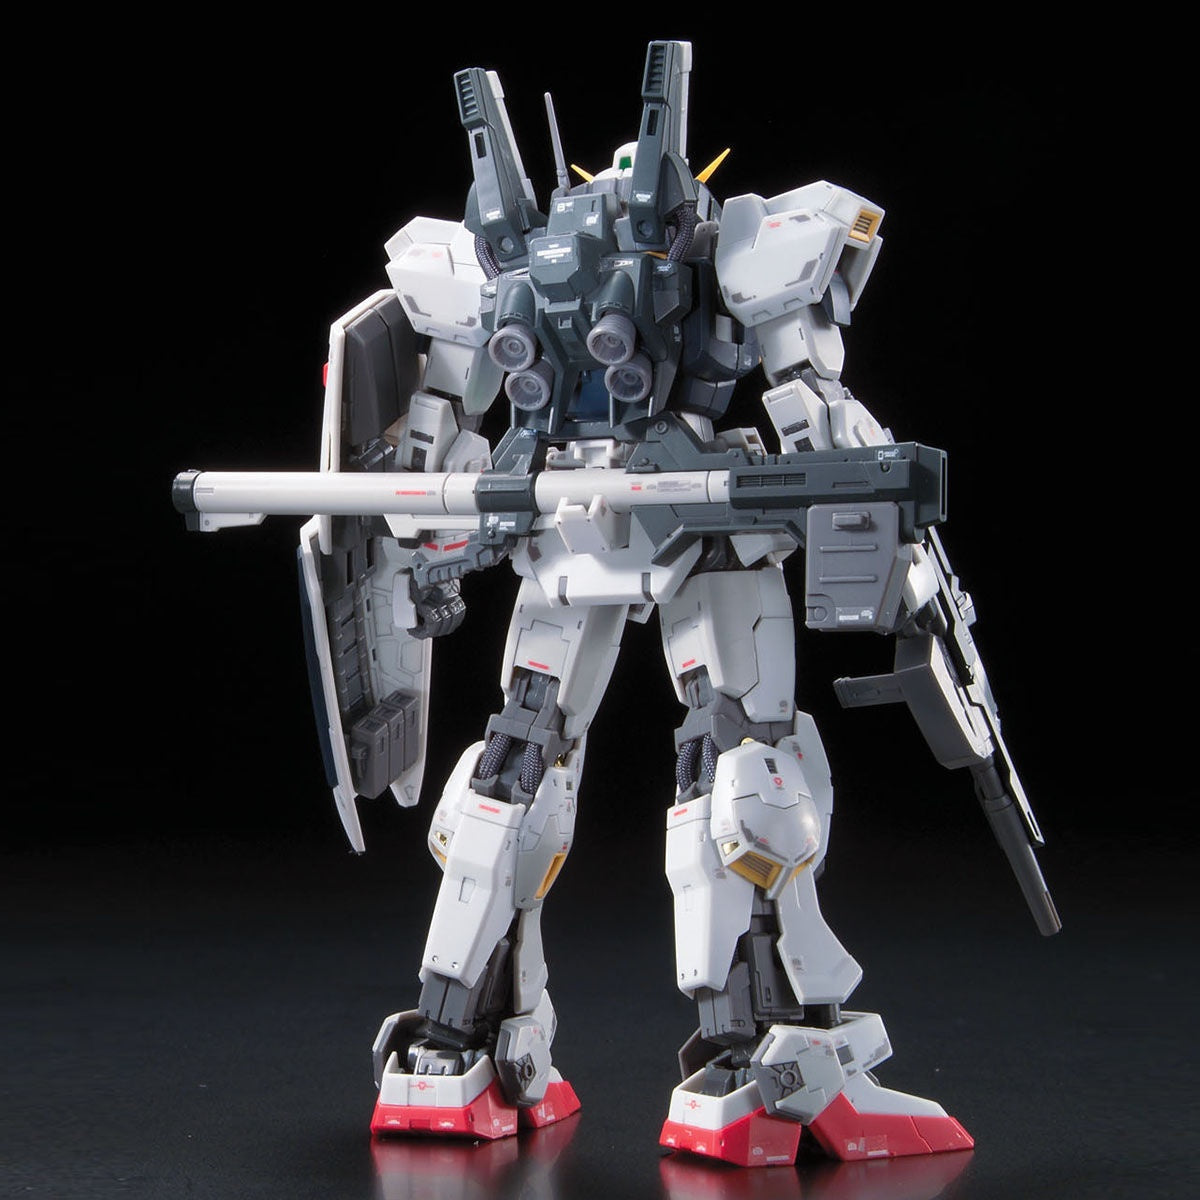 1/144 RG Gundam Mk-II AEUG Version Prototype RX-178 #08